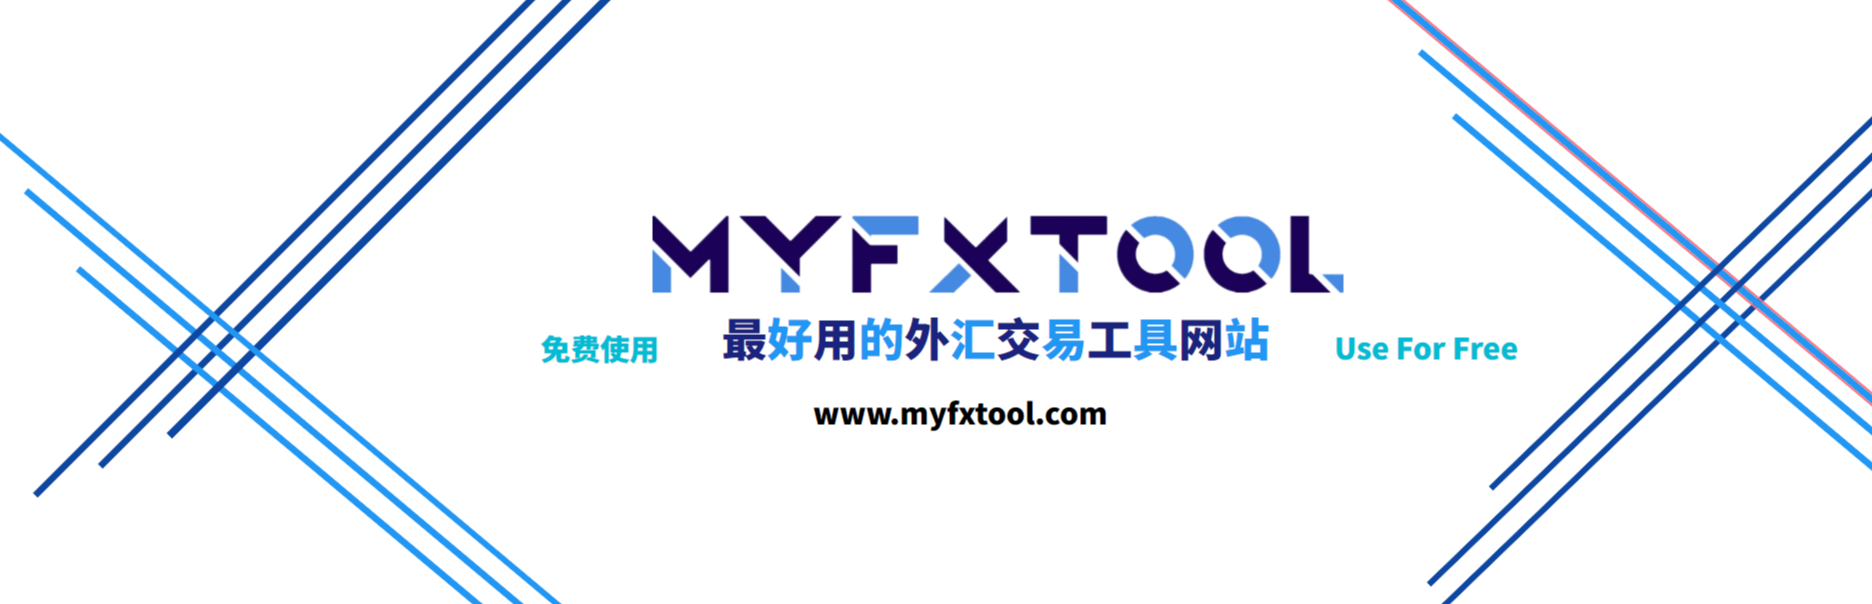 MyFXtool